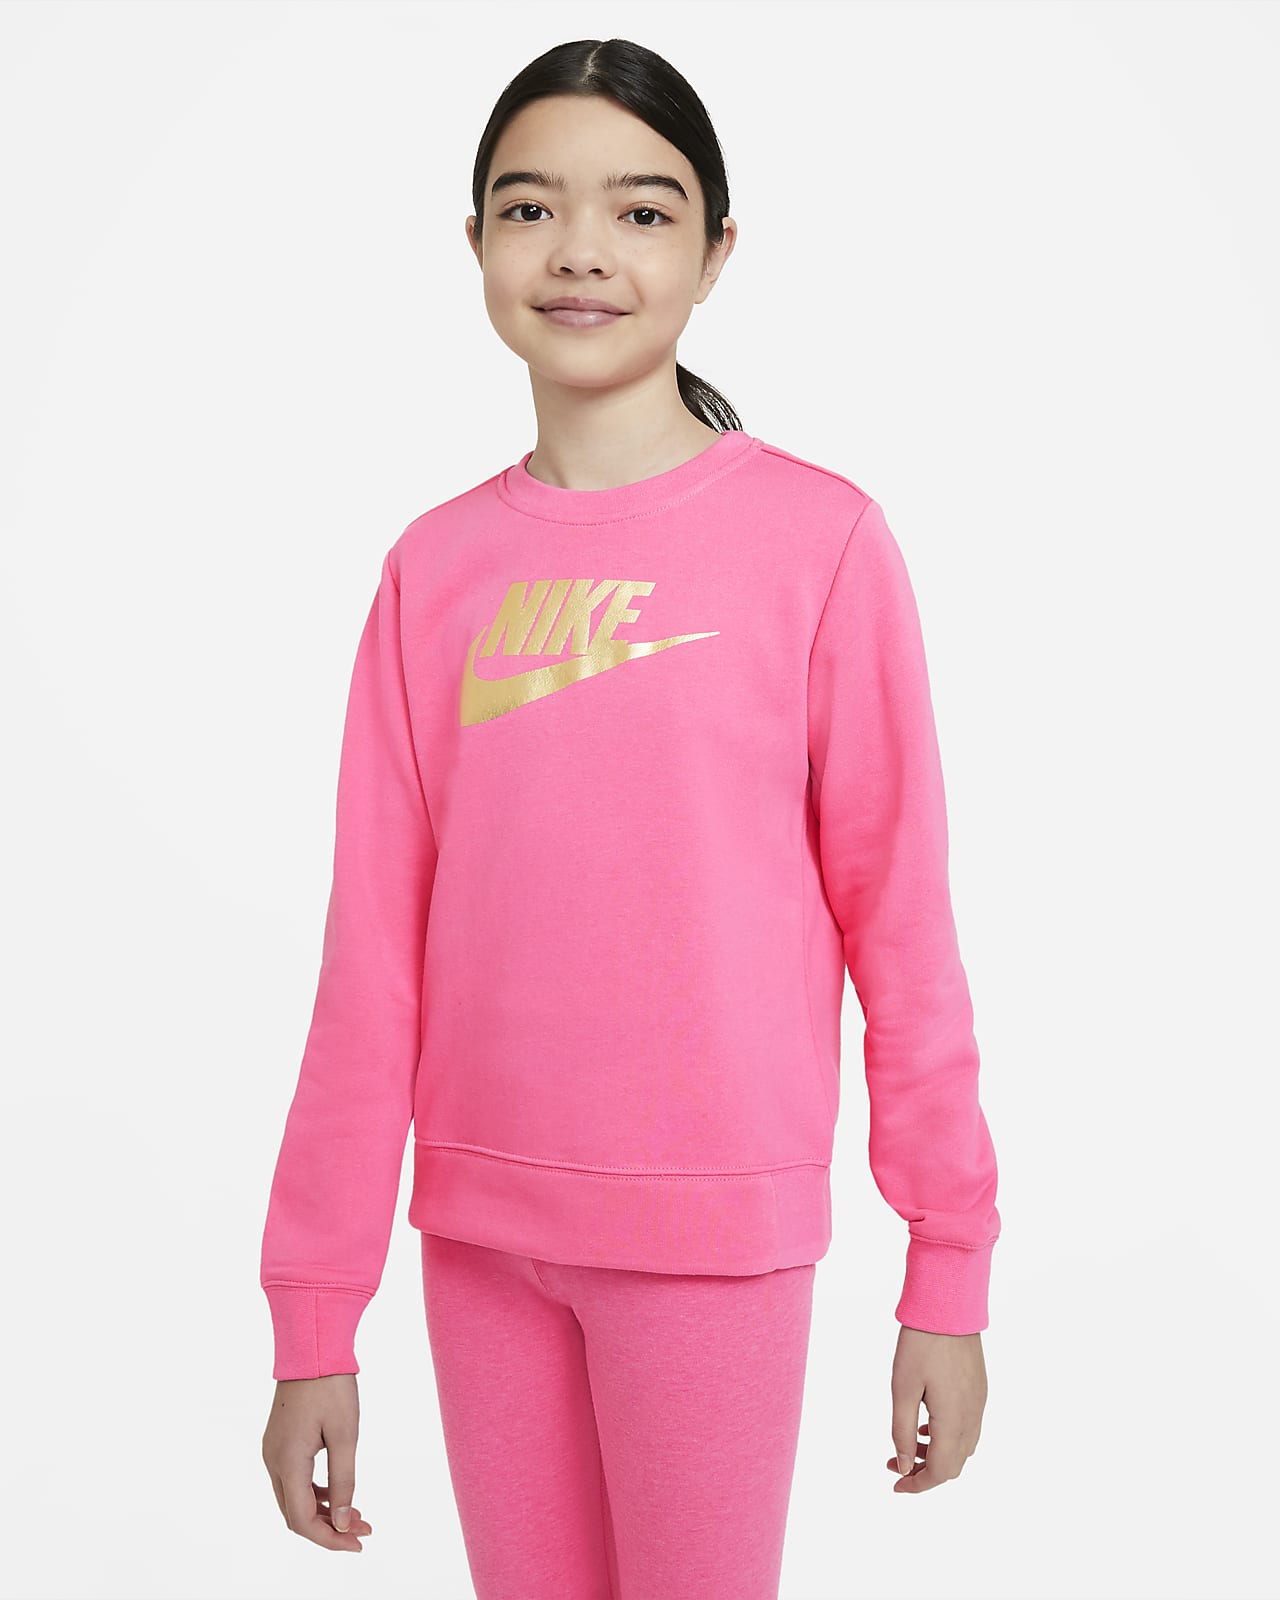 Свитшот из ткани френч терри для девочек школьного возраста Nike Sportswear